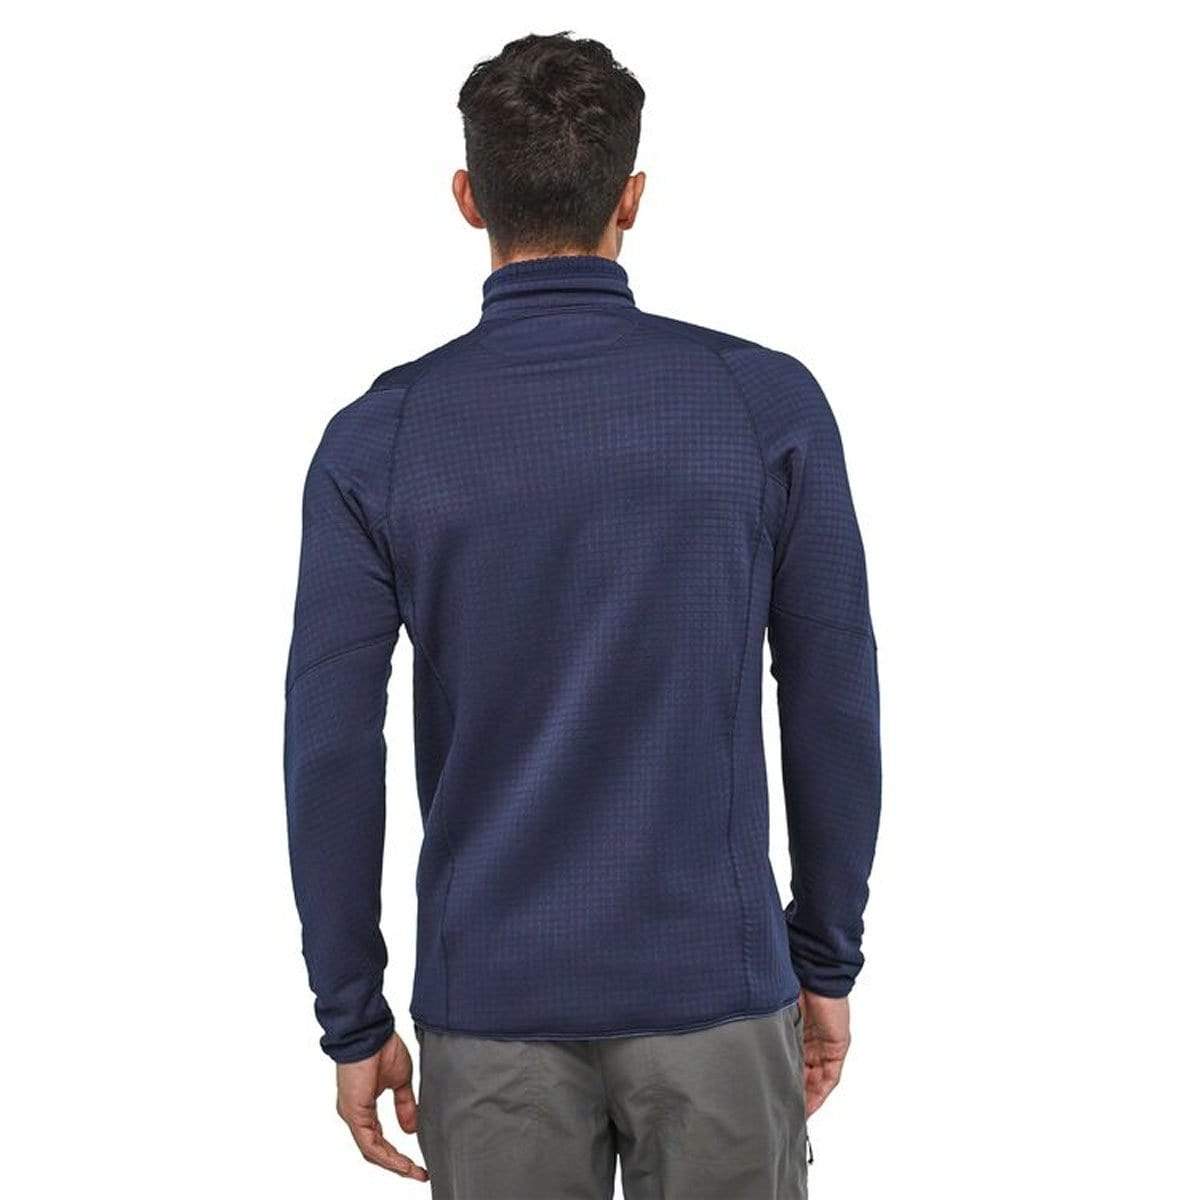 Patagonia pullover shirts for men - Coats & jackets